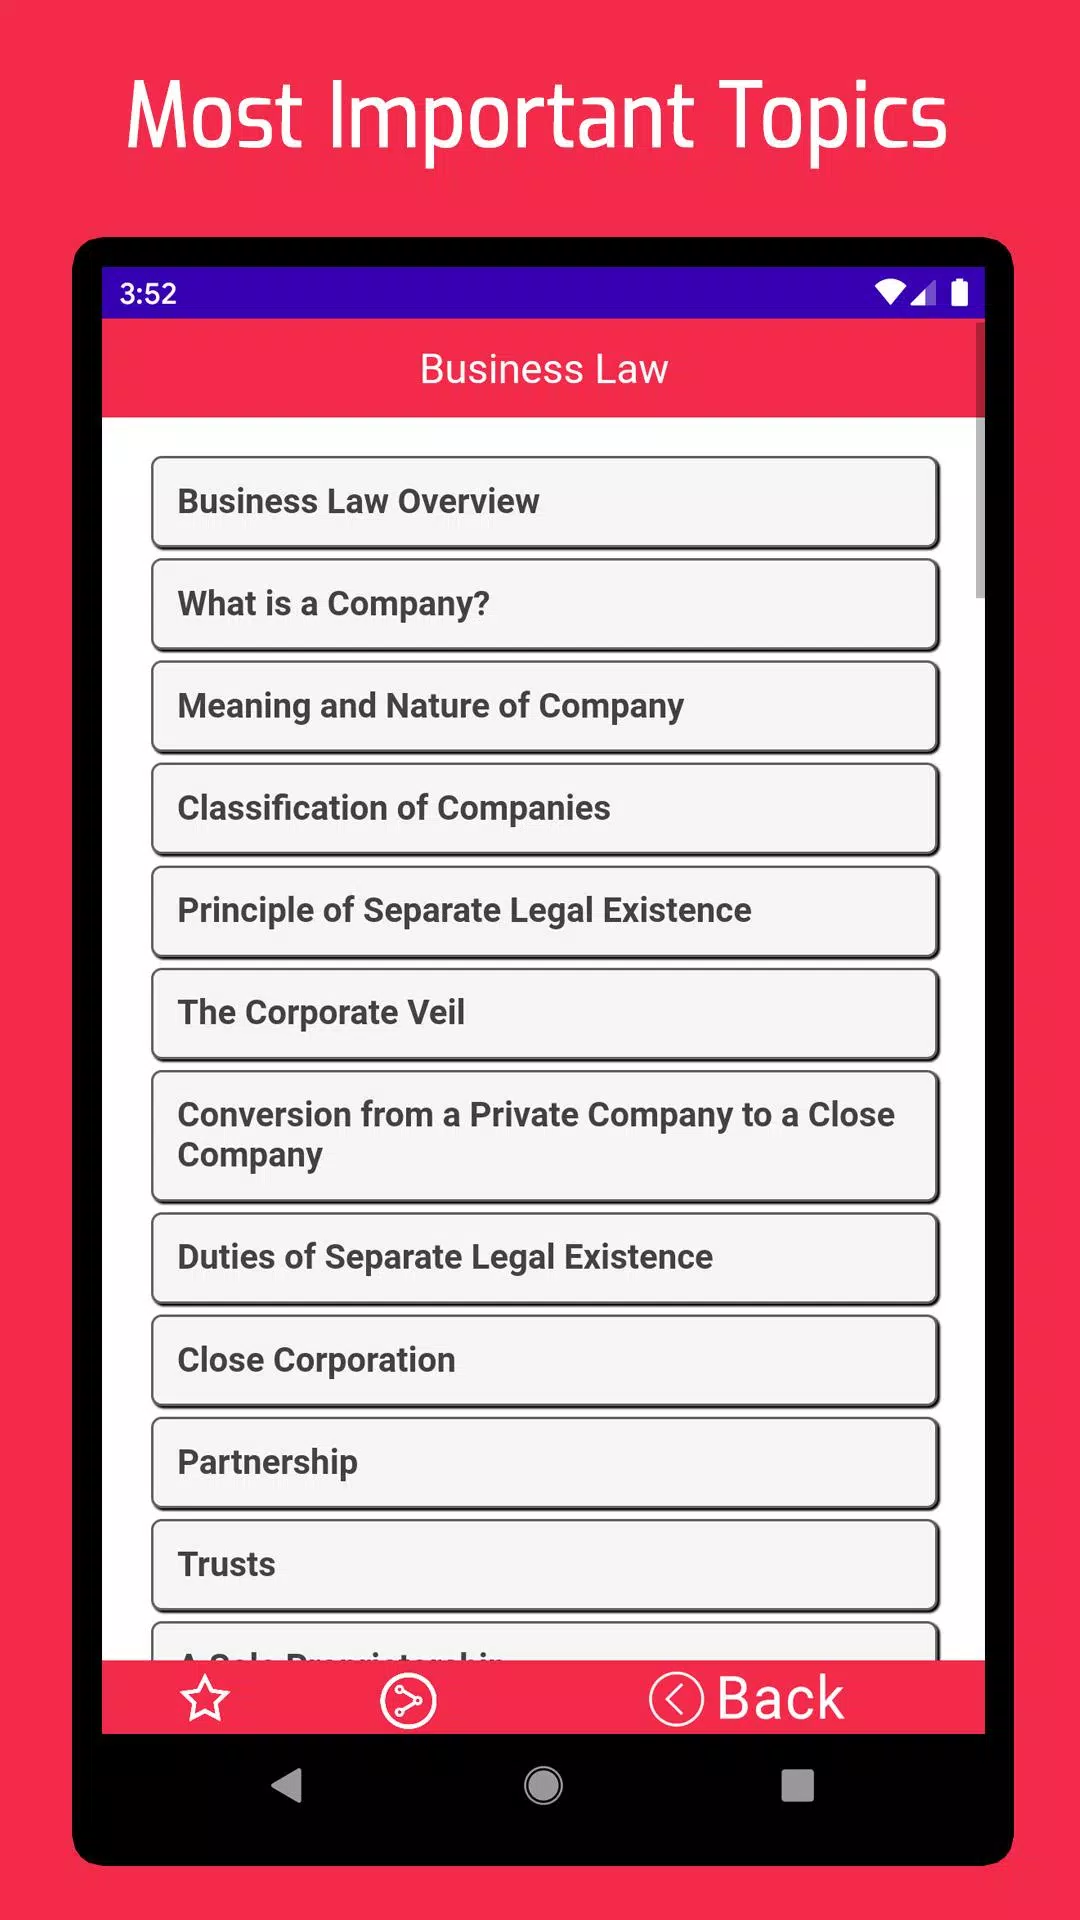 business law topics